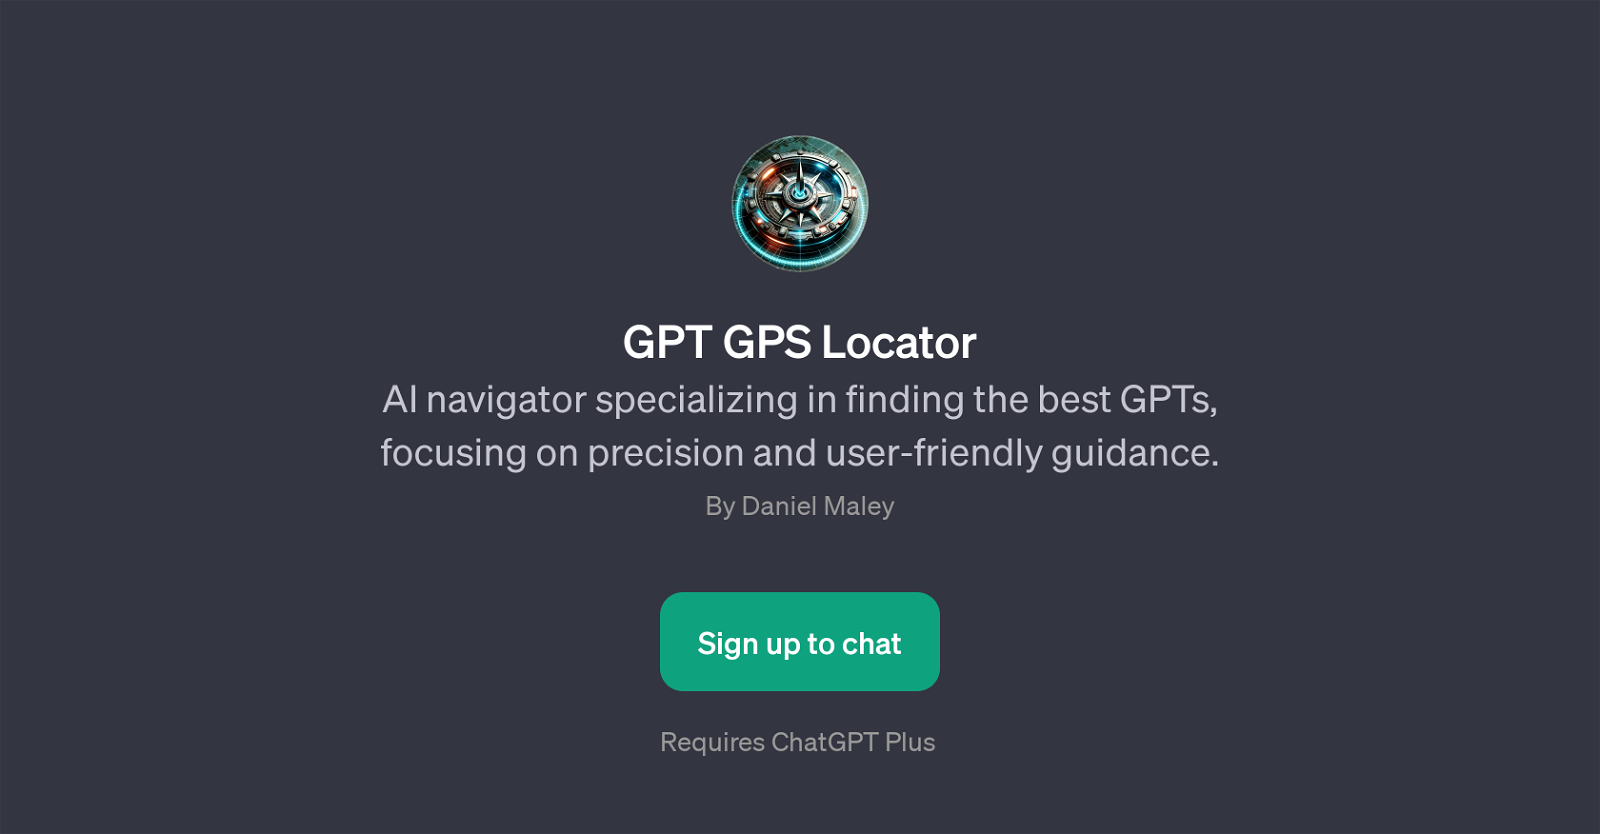 GPT GPS Locator website